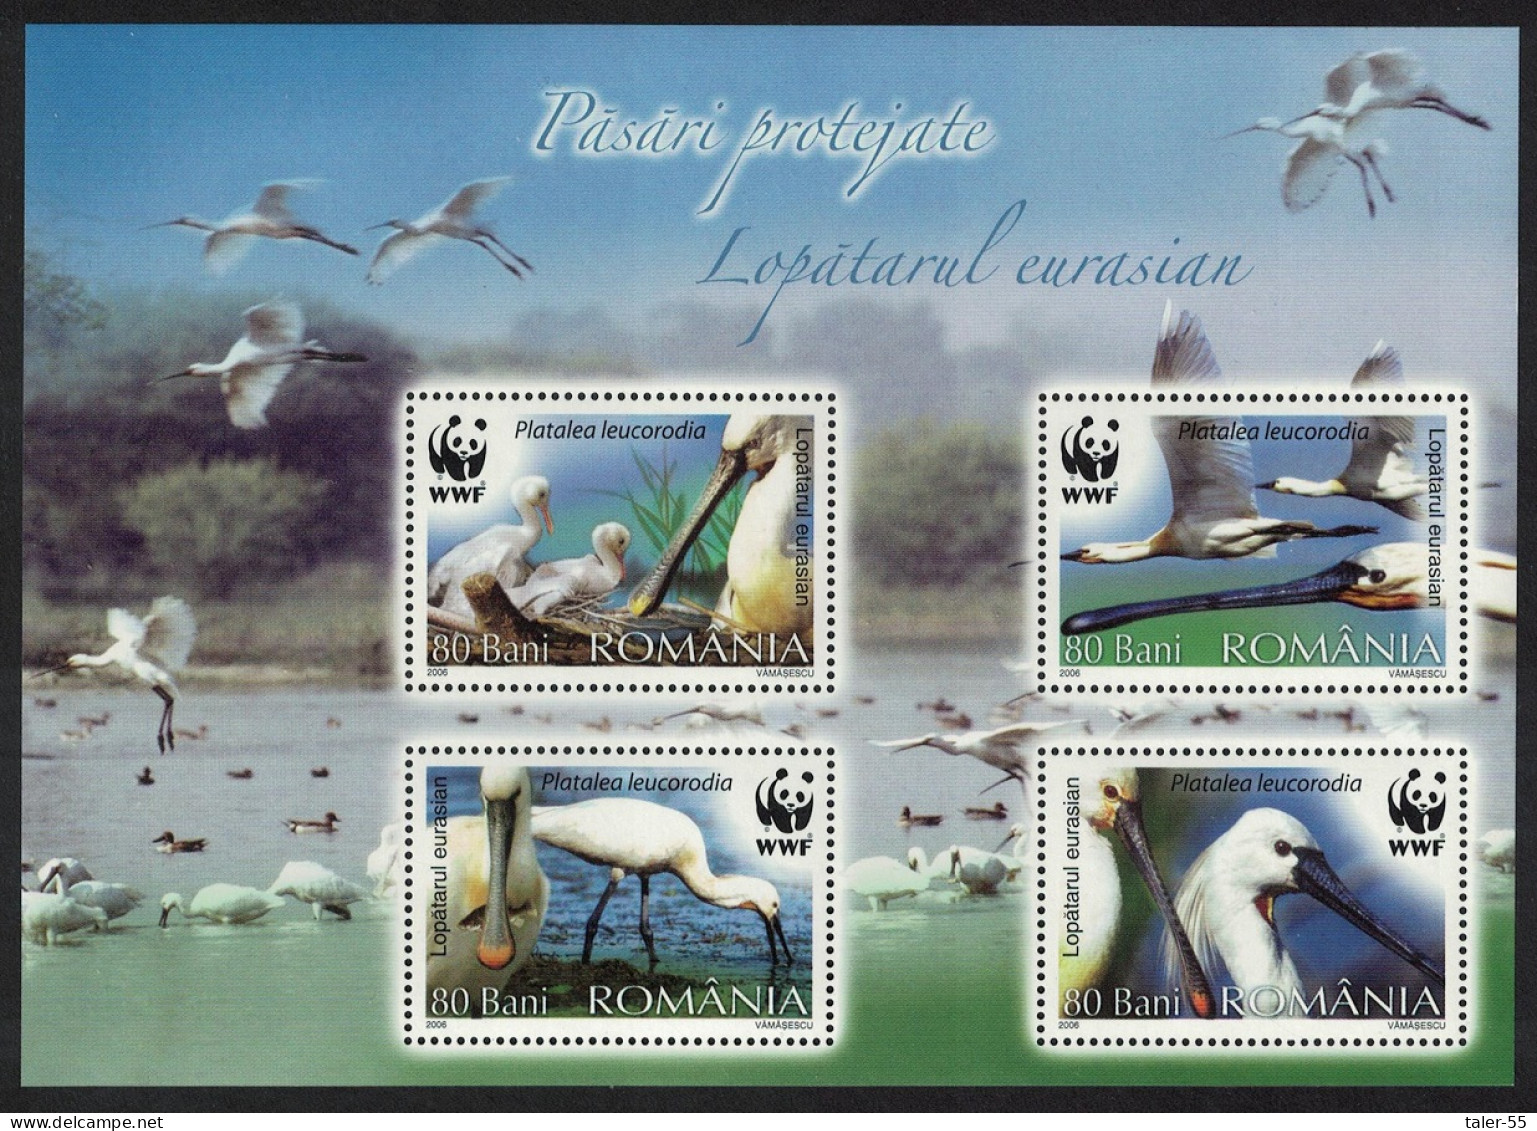 Romania WWF Eurasian Spoonbill Bird MS 2006 MNH SG#MS6735 MI#Block 391 - Ongebruikt